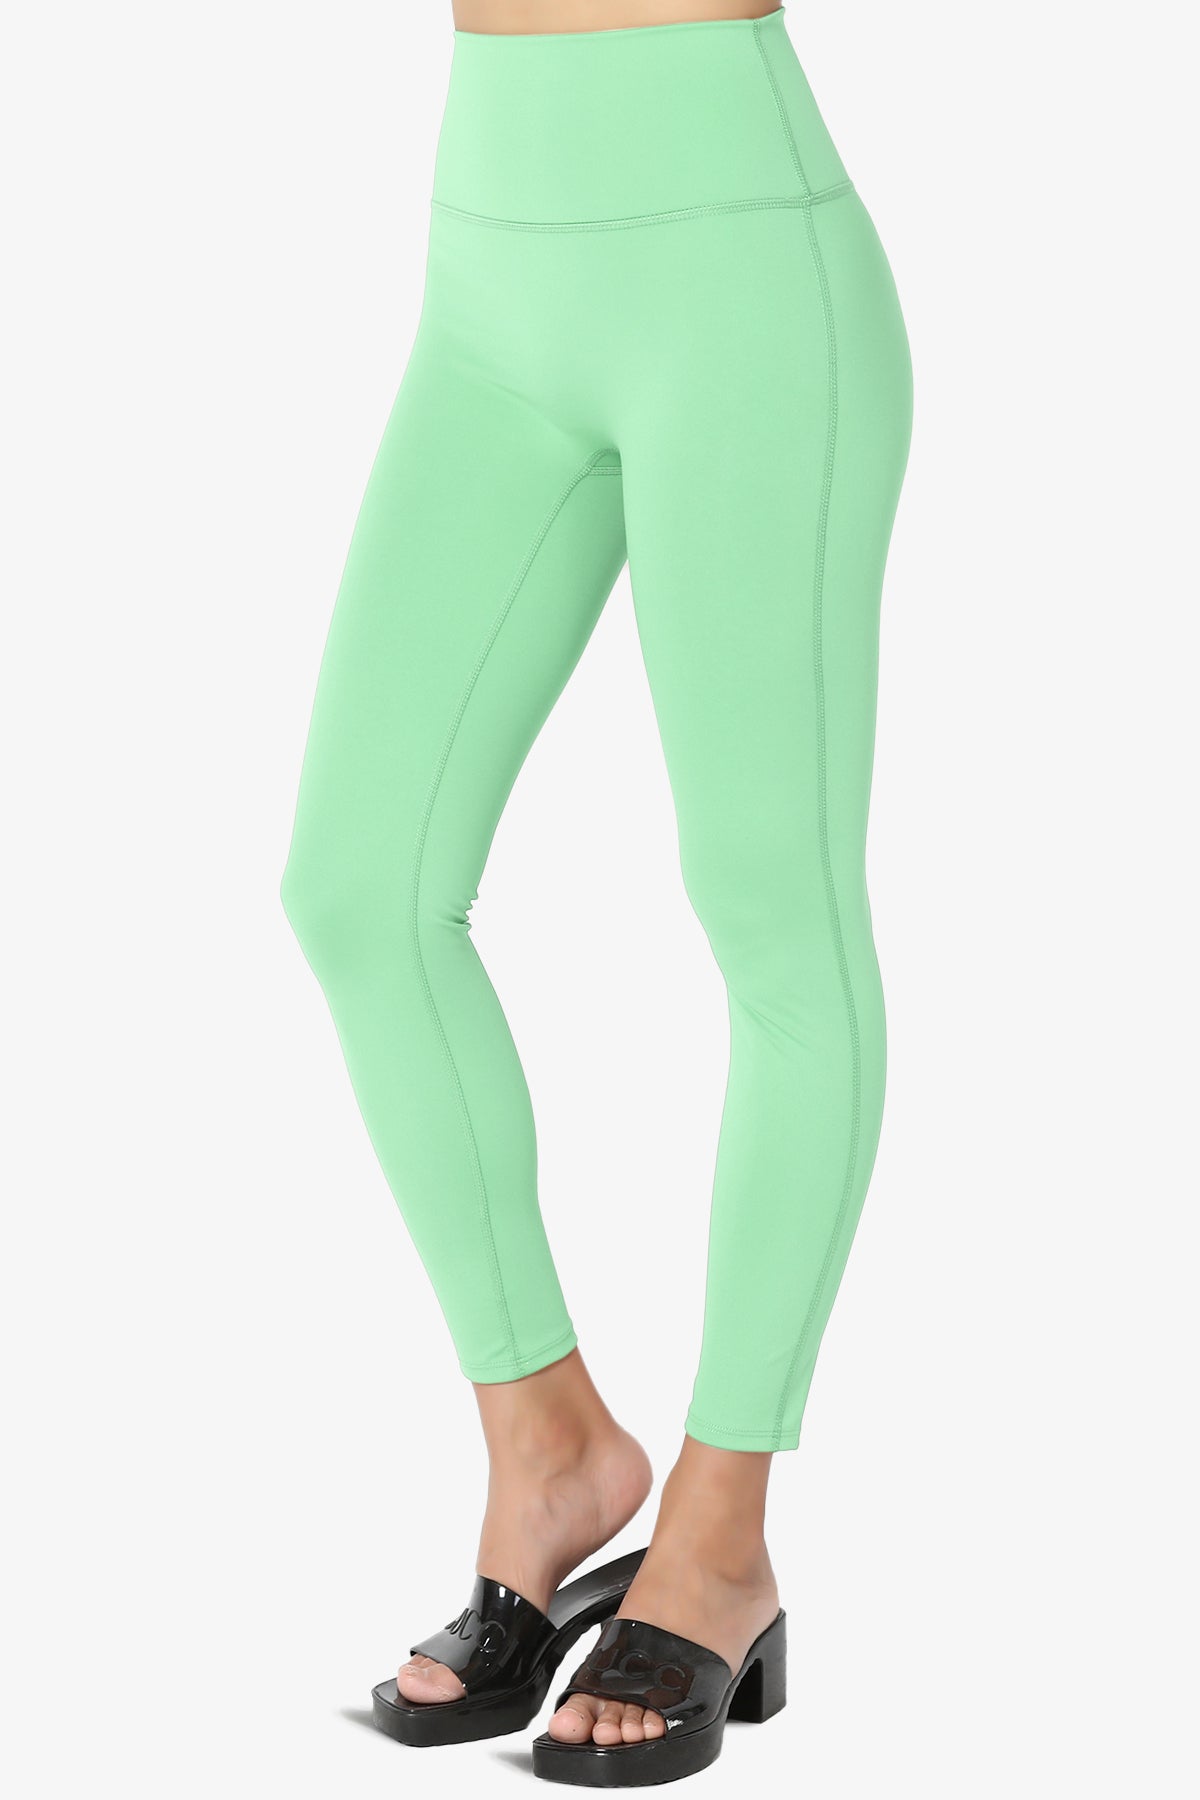 Alo Yoga Athletic Glossy Idol Ruched Leg Yoga Pants Green Women's Size S